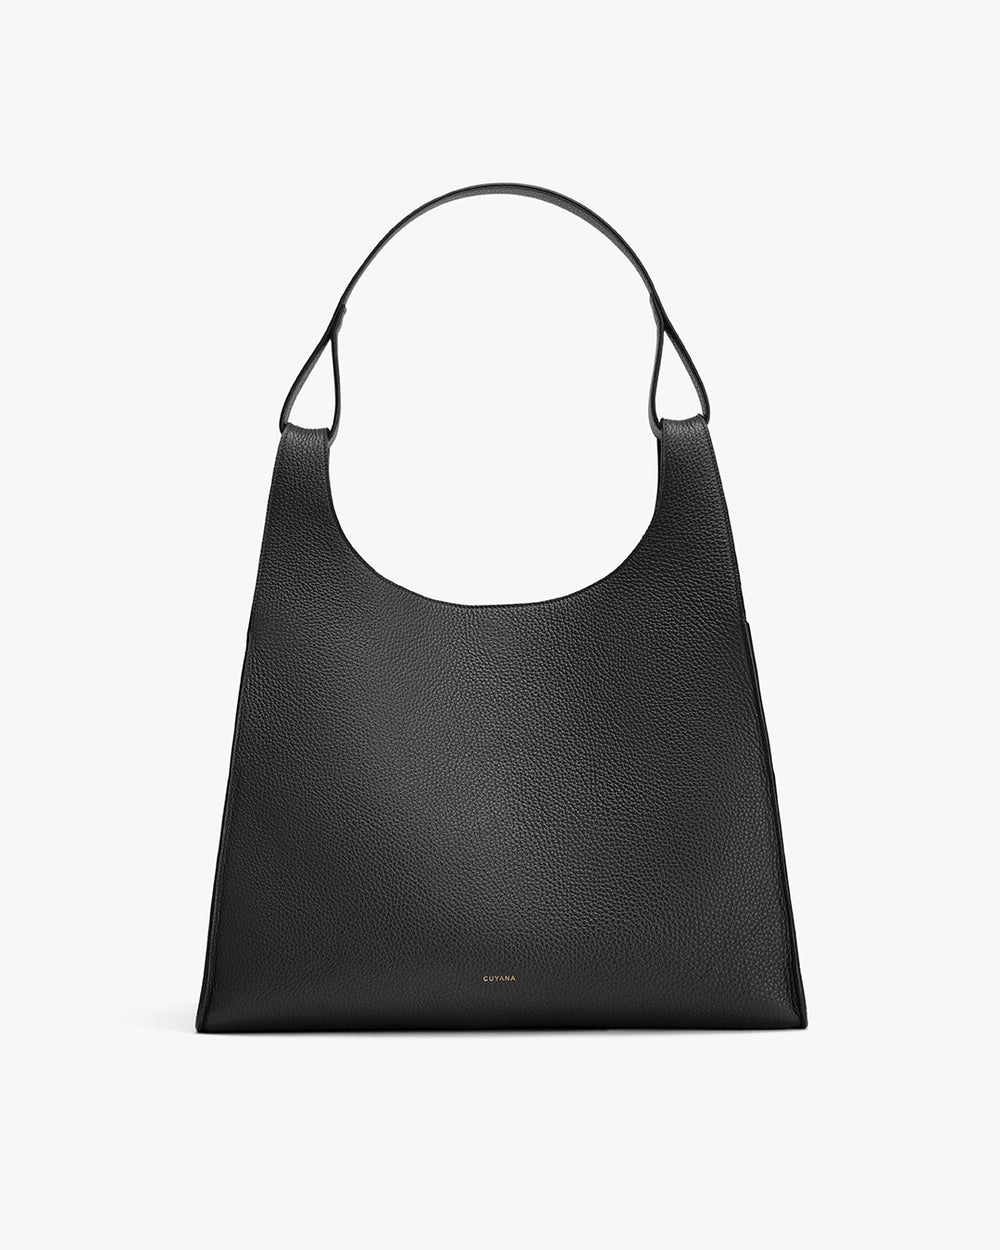 Handbag with a single shoulder strap and a small logo at the bottom center.